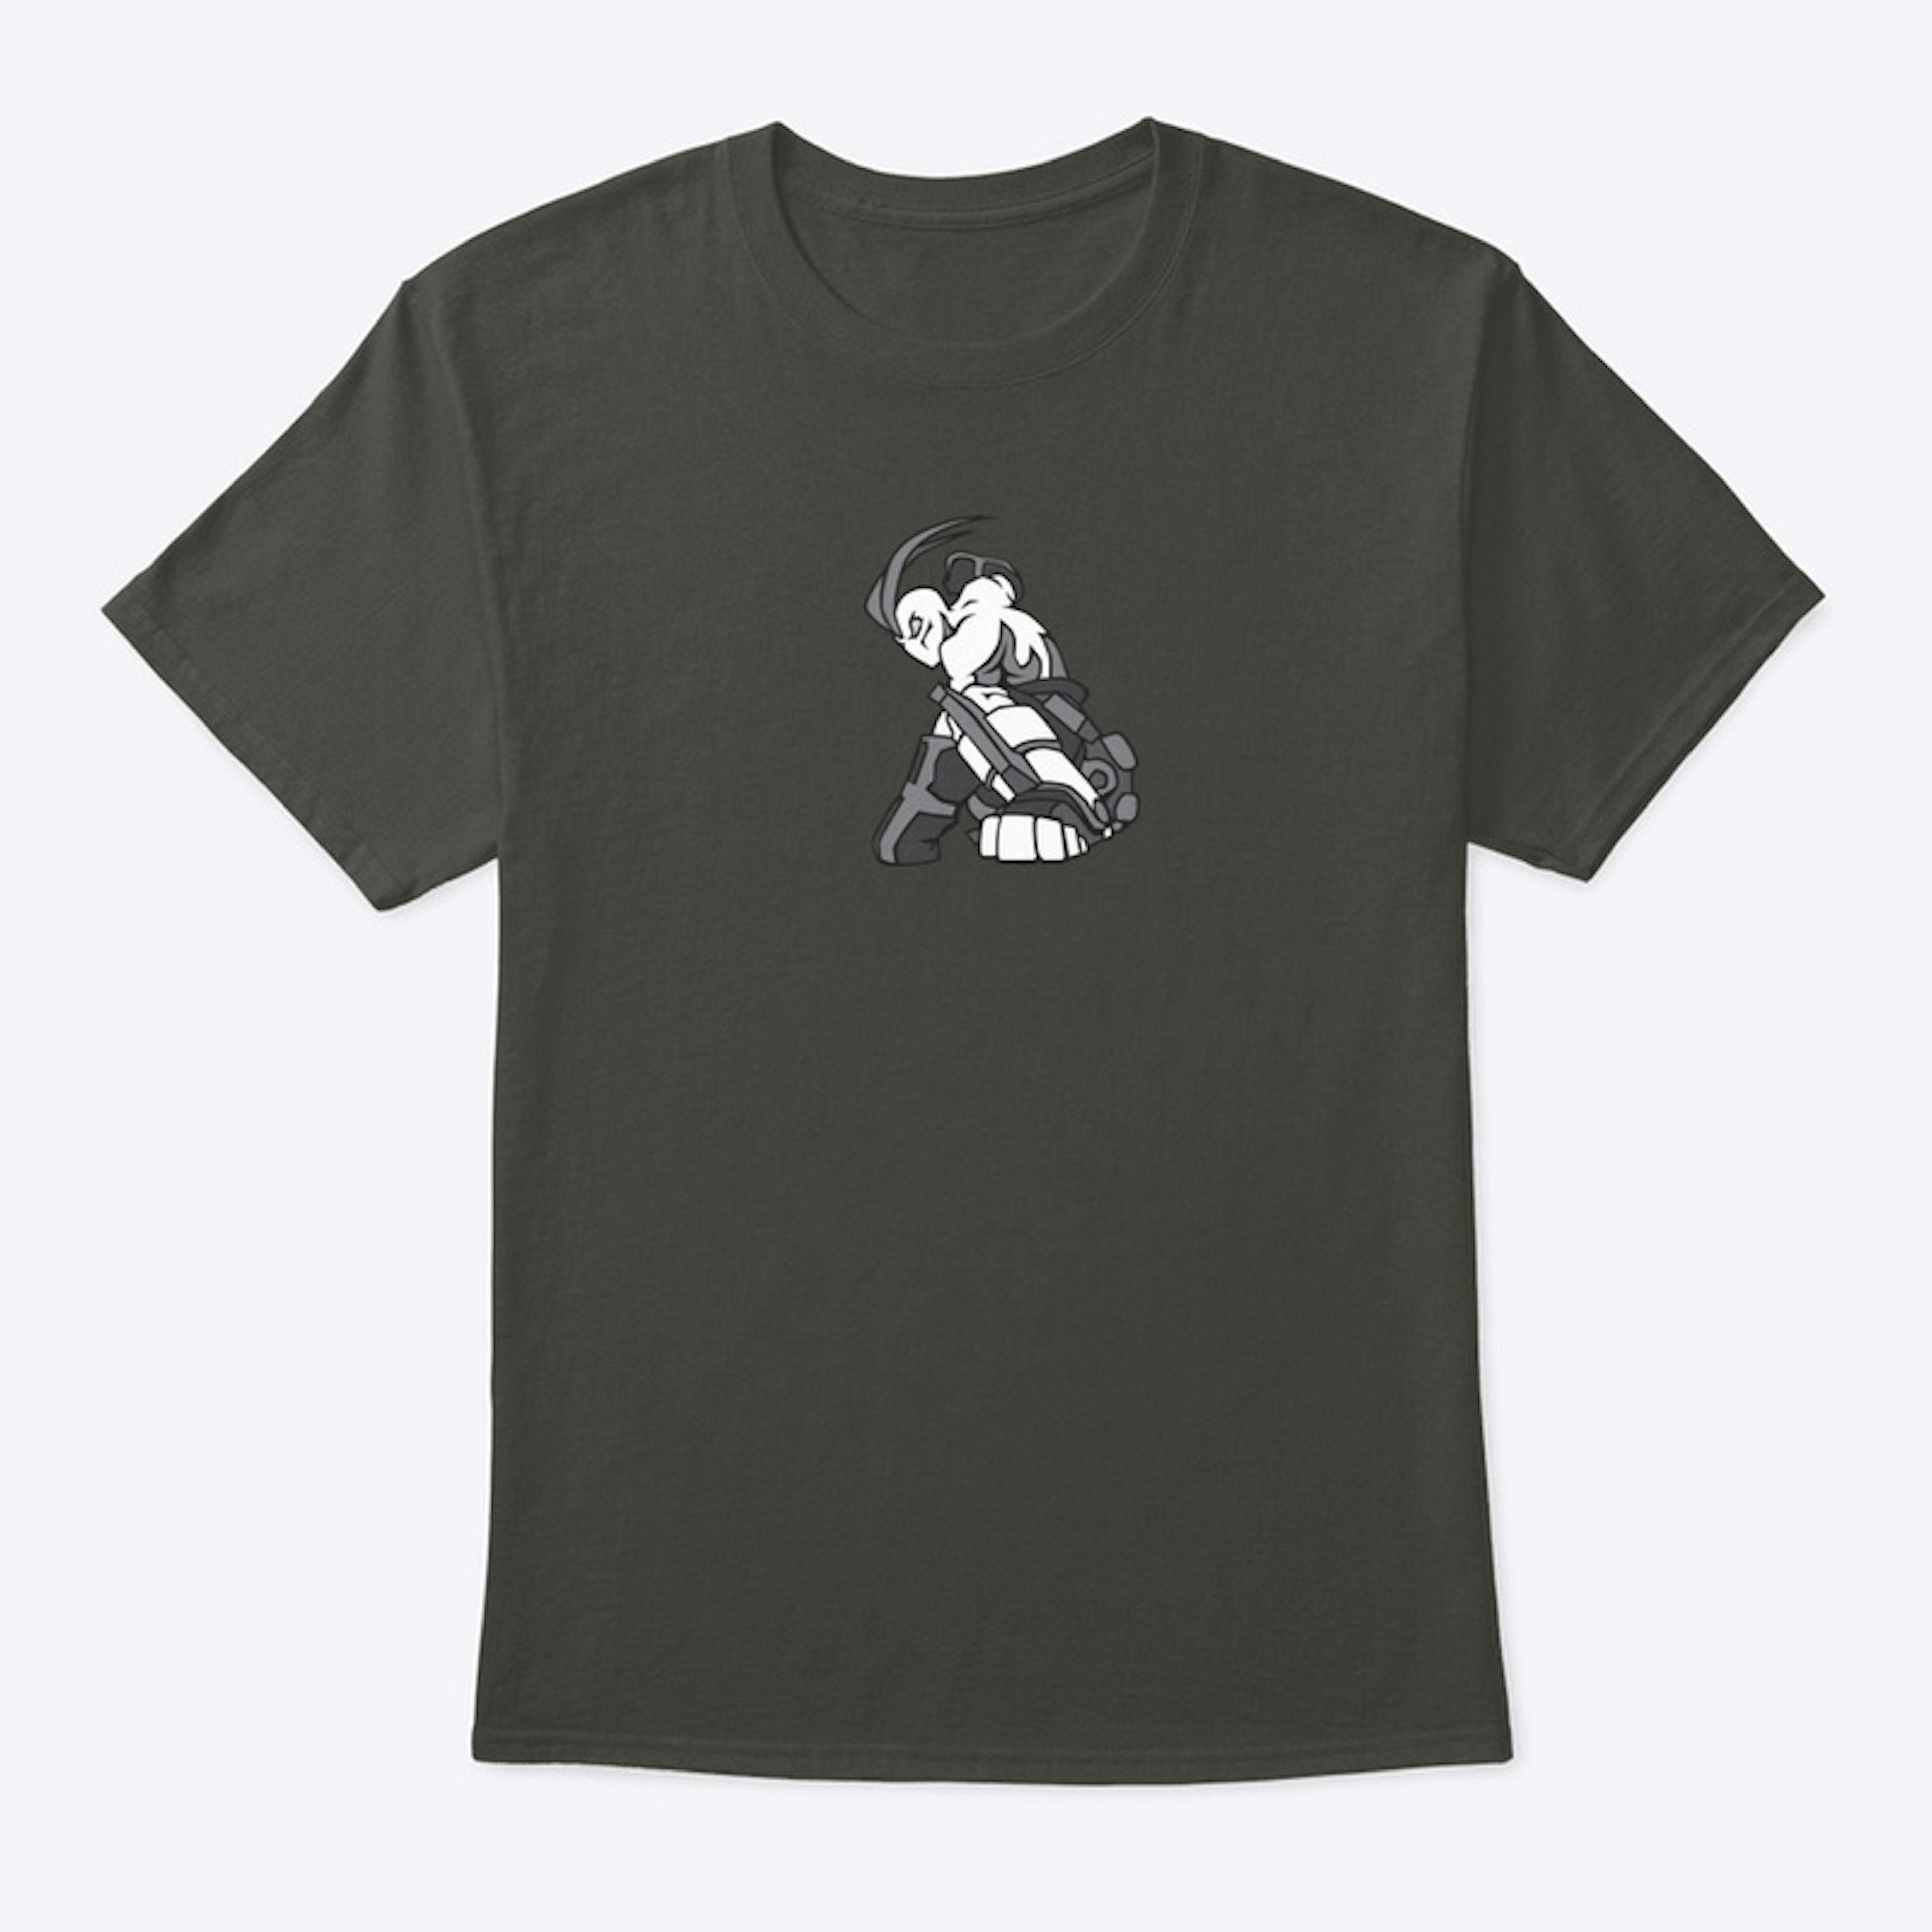 KirkPin design on a Shirt